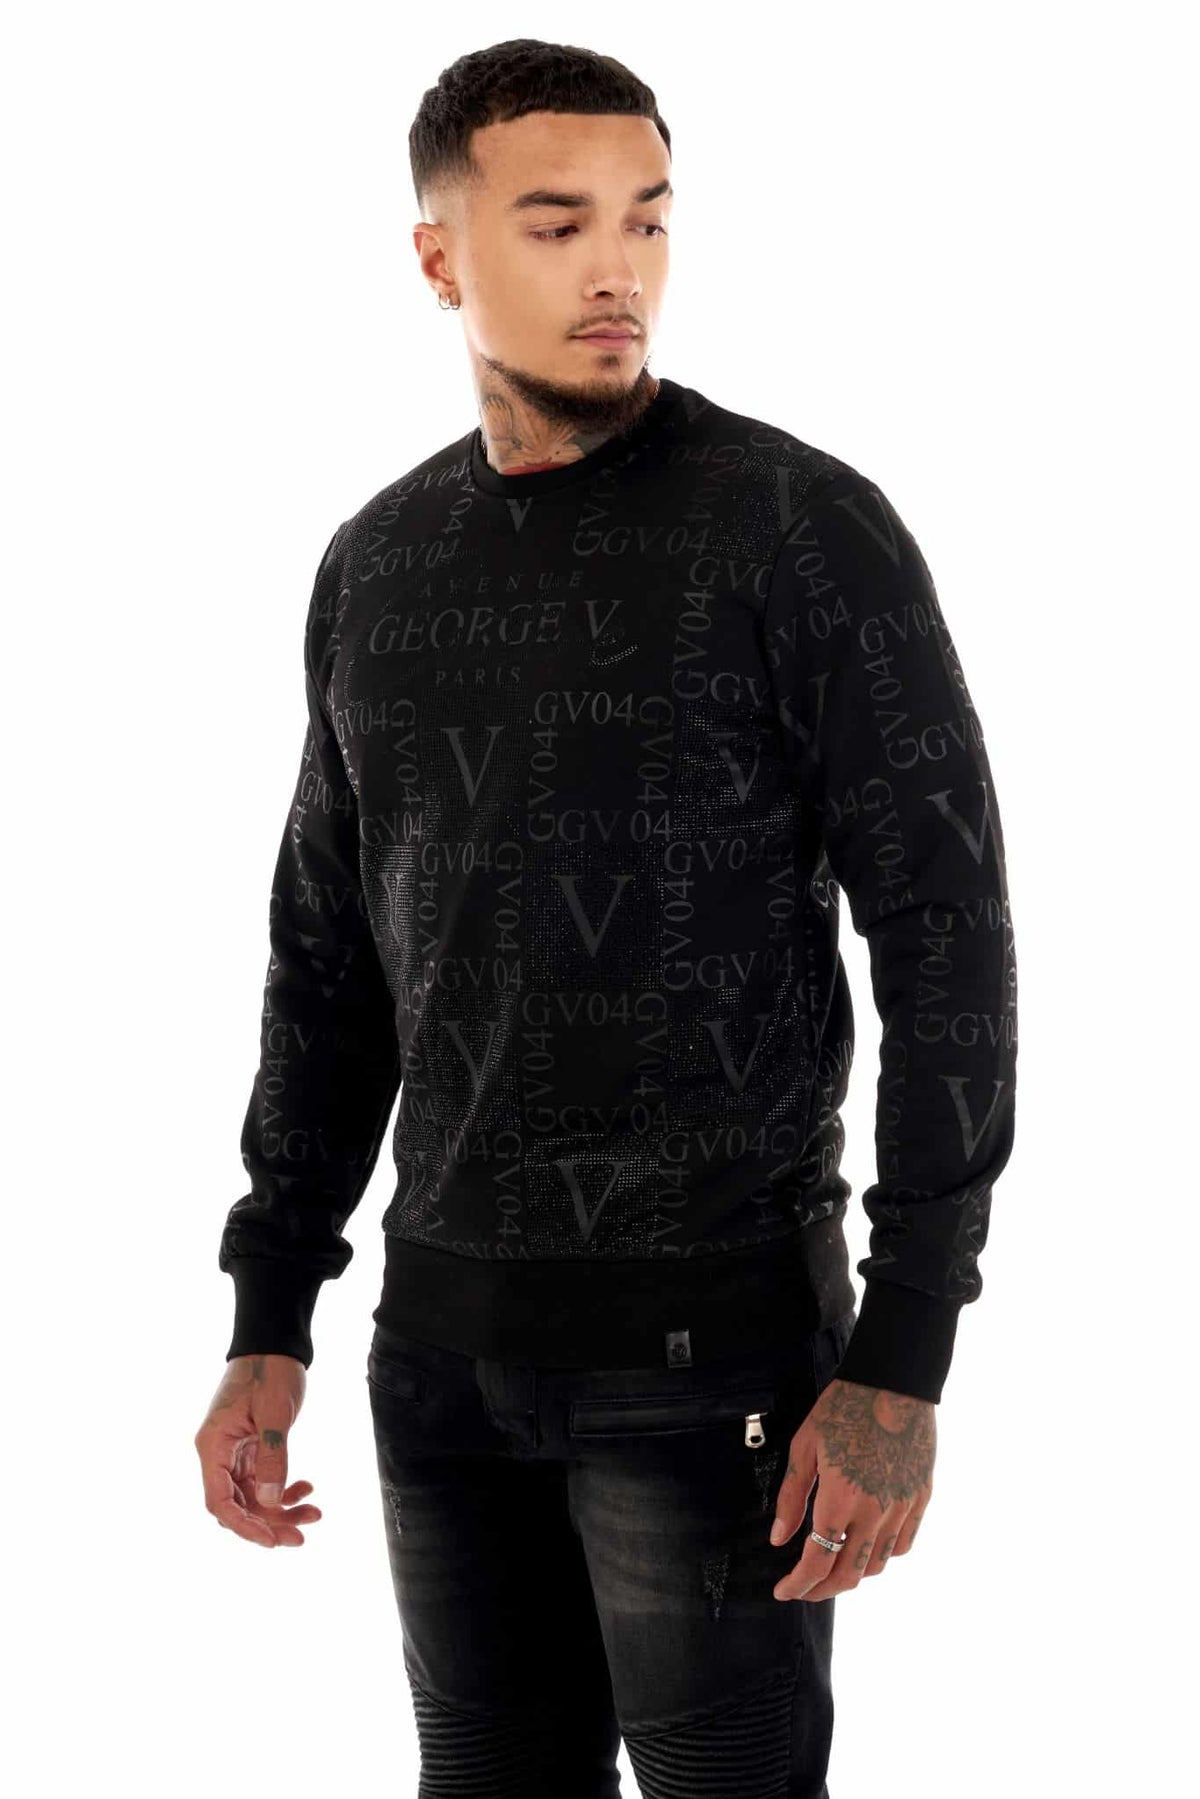 Avenue George V Paris Black Sweatshirt